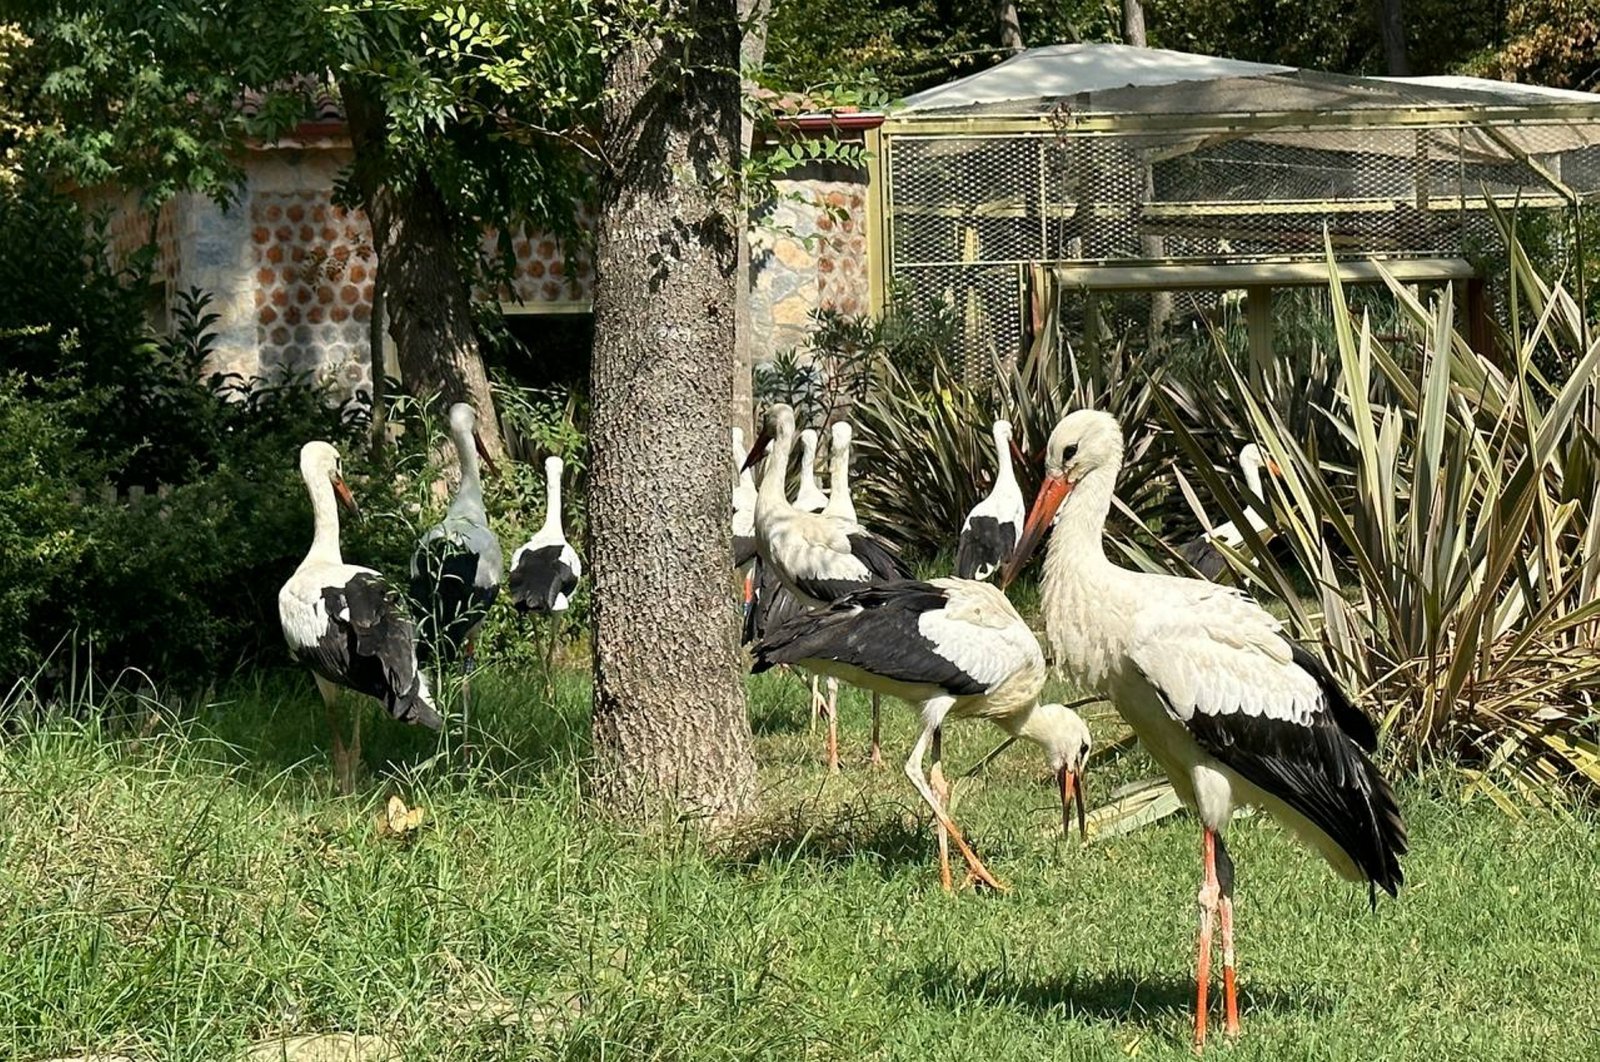 Injured storks treated in Türkiye’s Kocaeli, freed to resume migration